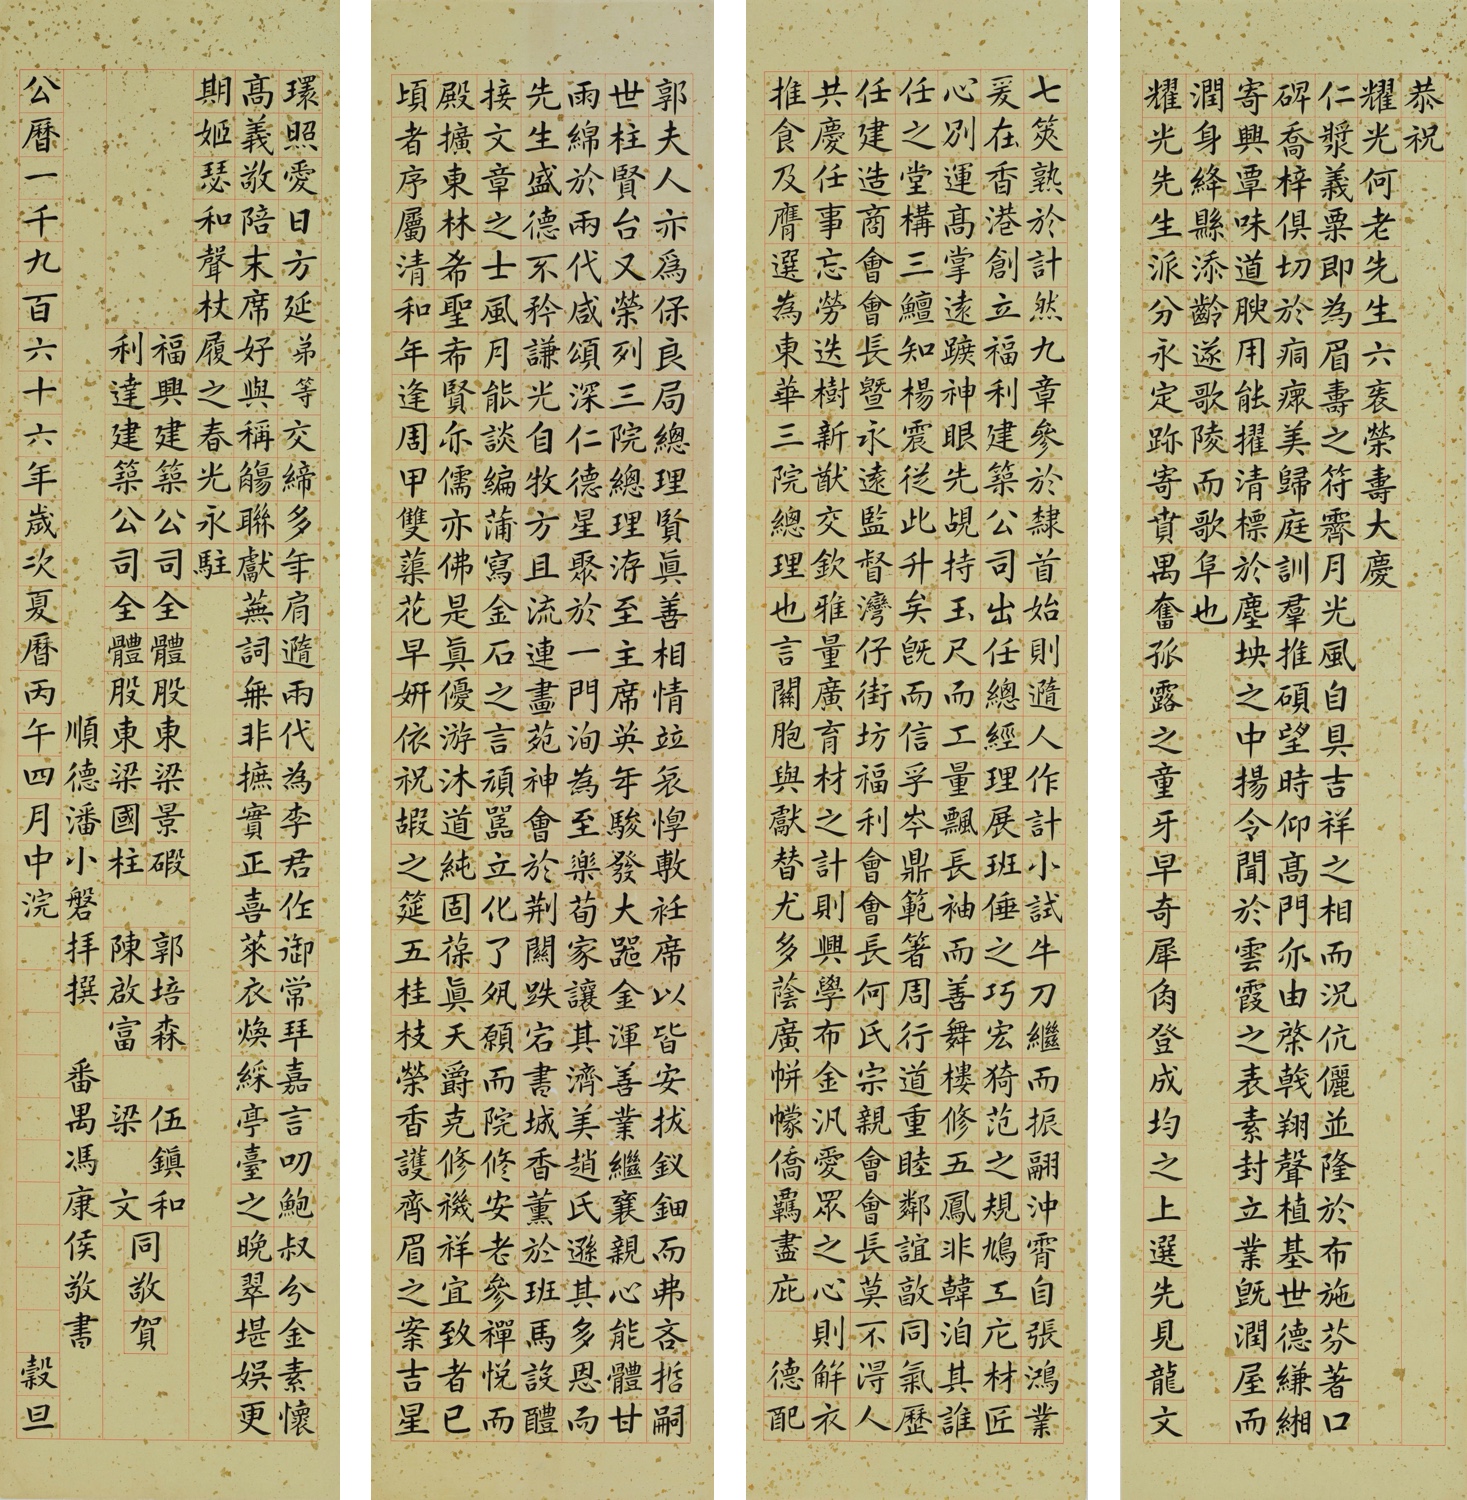 Feng Kanghou (1901 – 1983) Birthday encomium composed by Pan Xiaopan in regular script